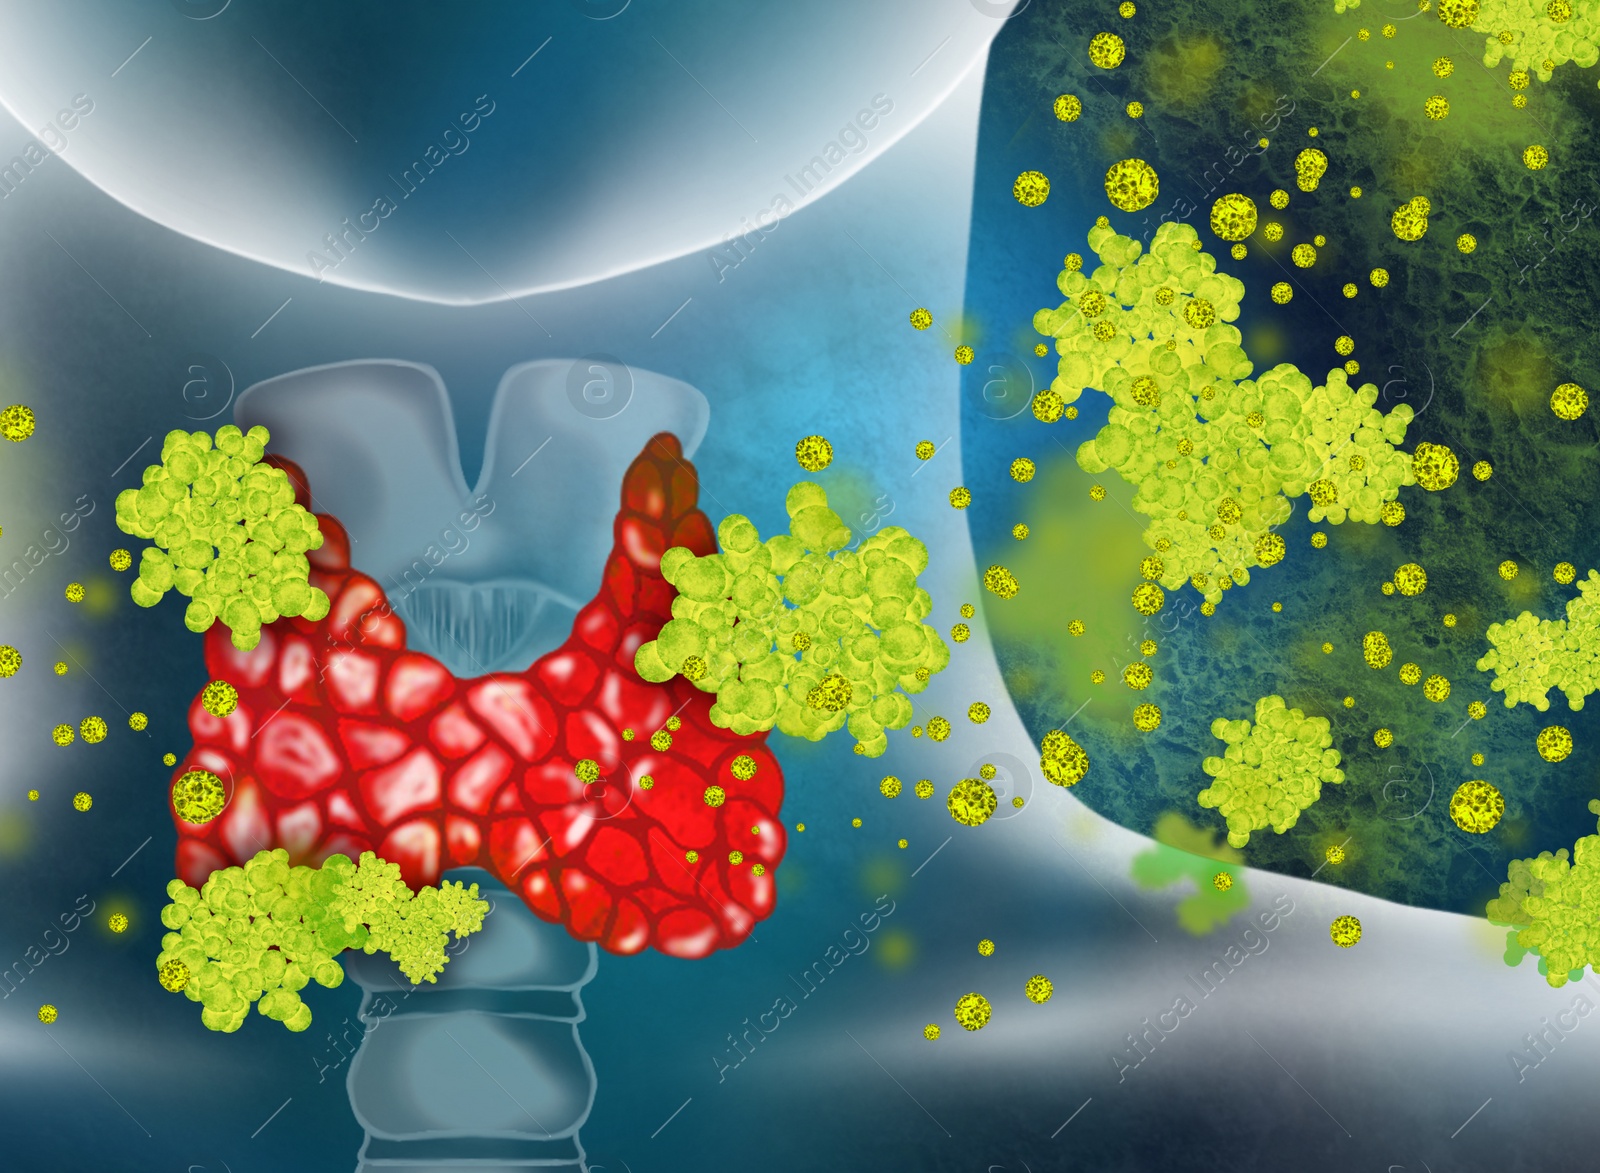 Illustration of Illustration of human thyroid cancer on color background